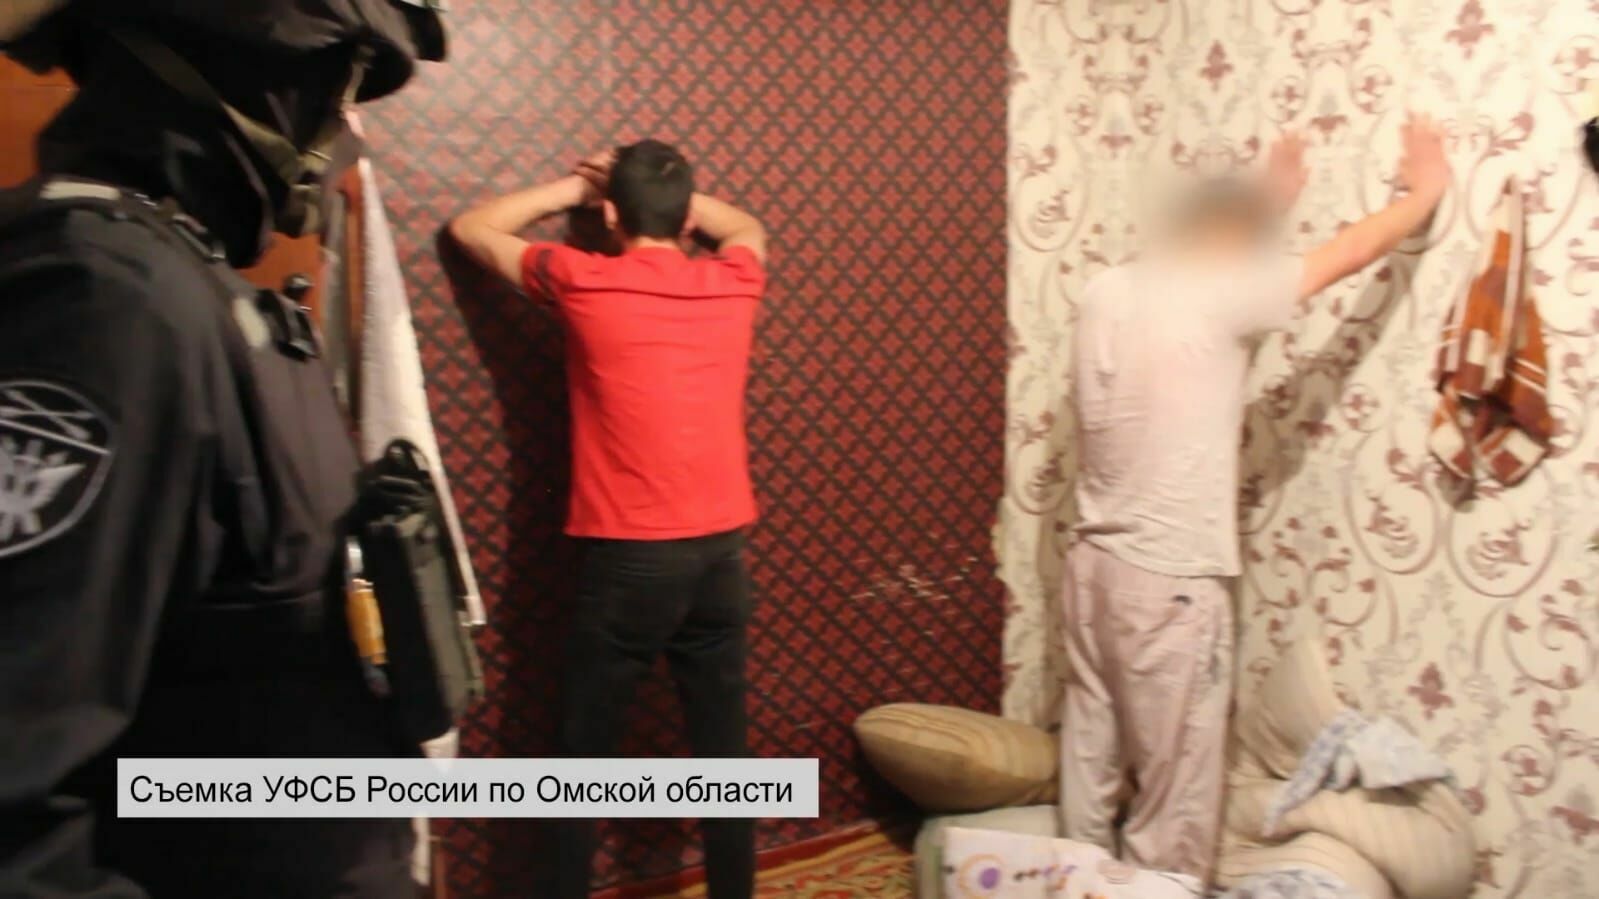 Members of a terrorist organization were detained in Omsk